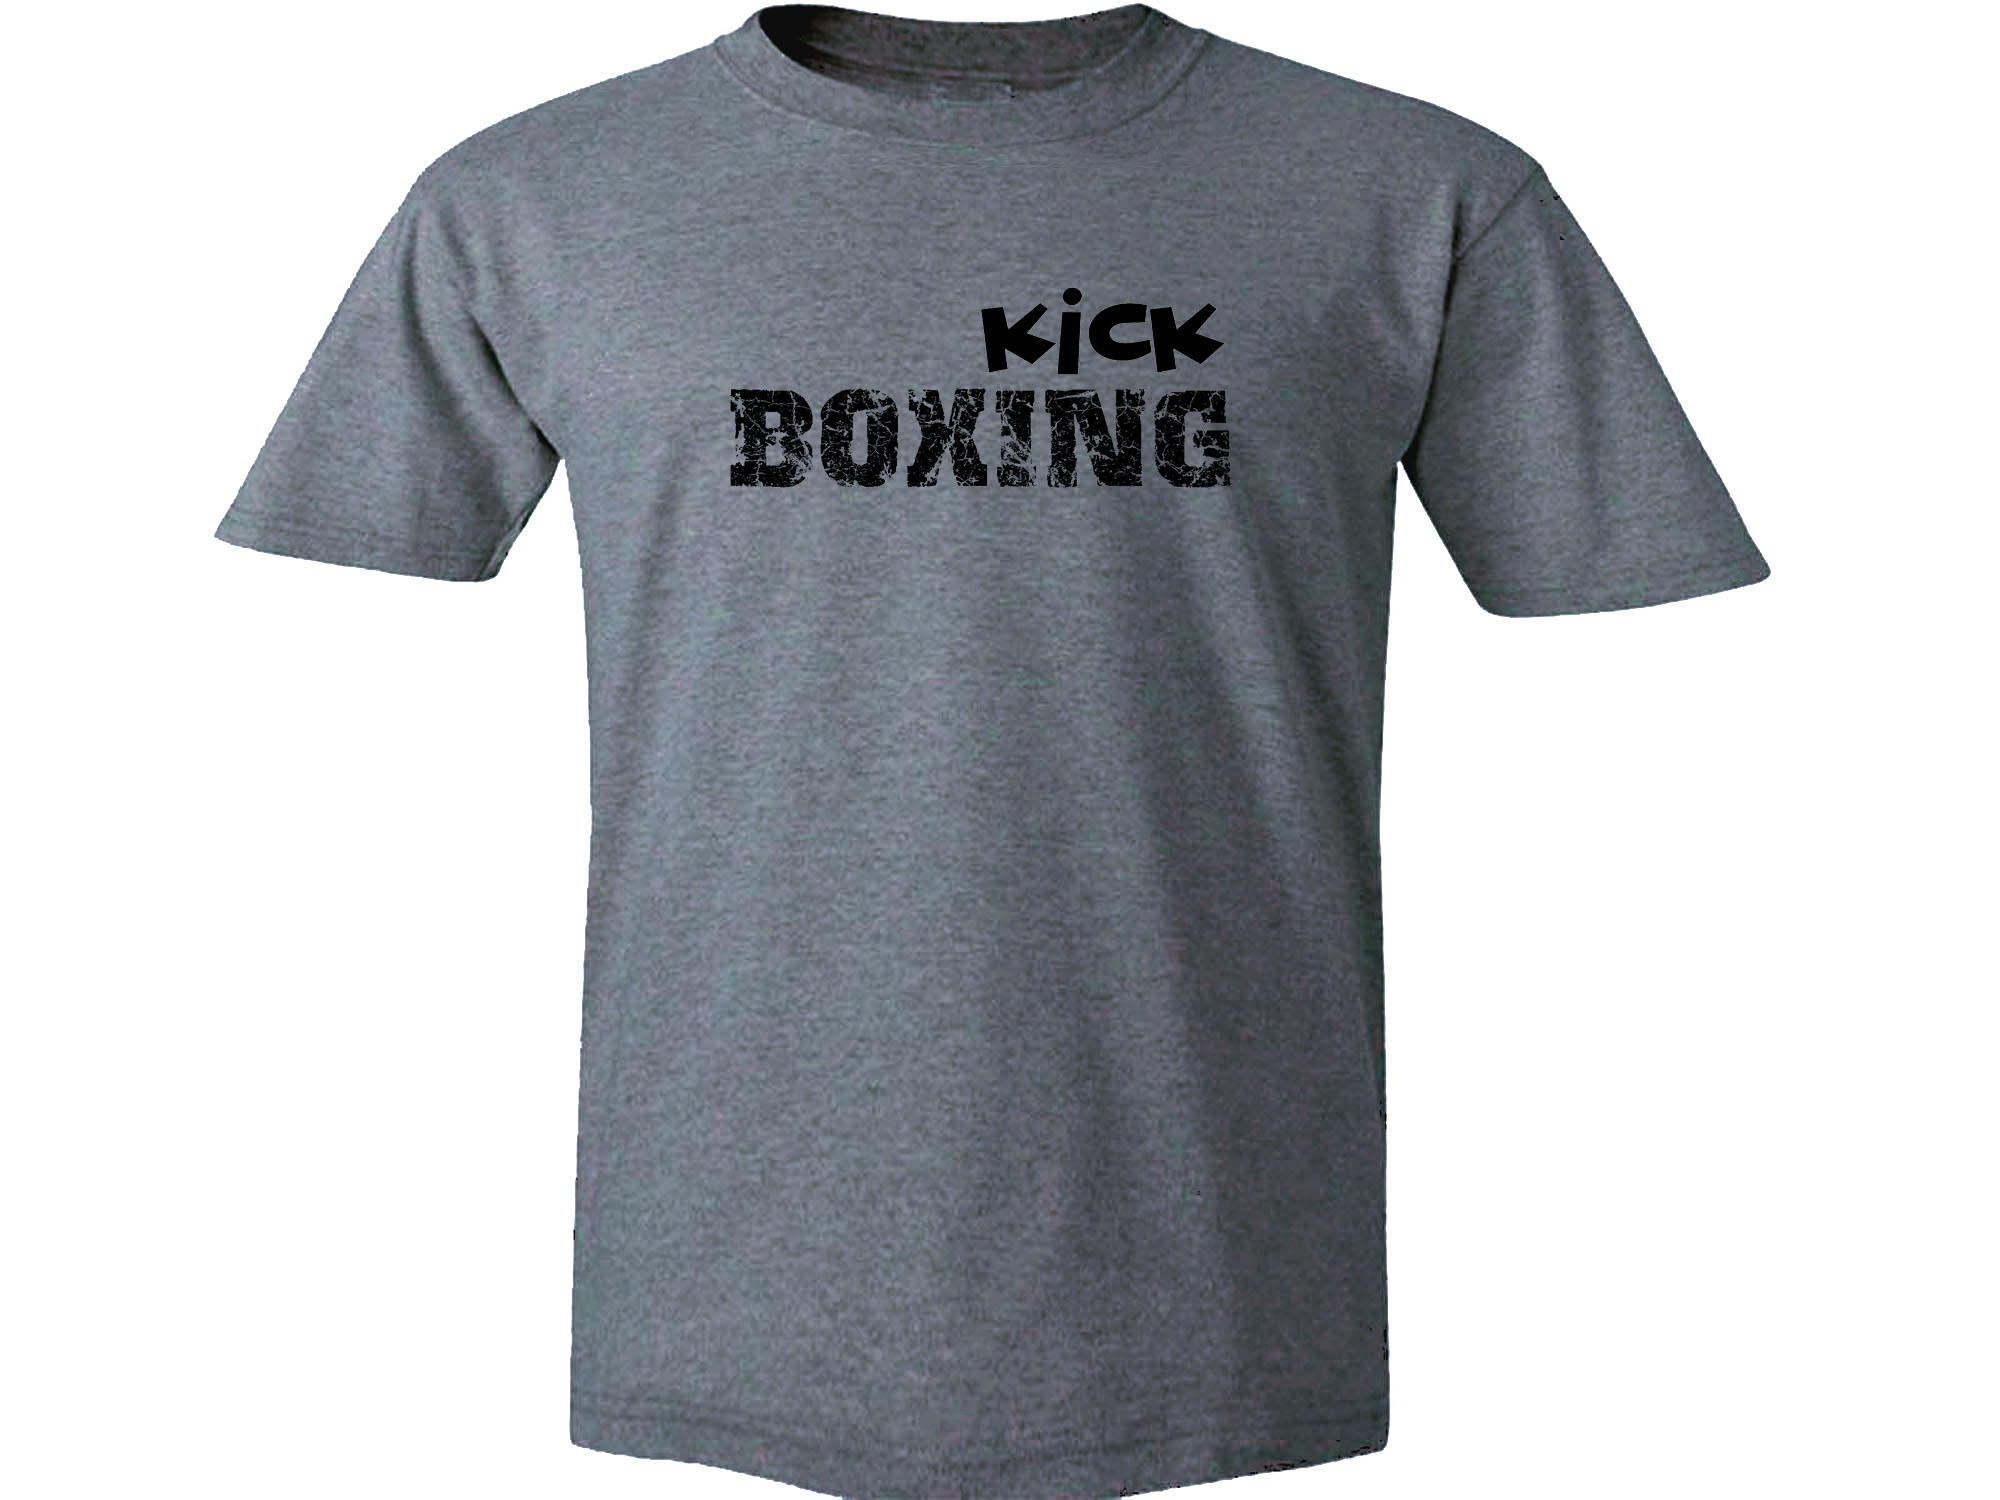 Kickboxing distressed print 100% cotton gray new t-shirt